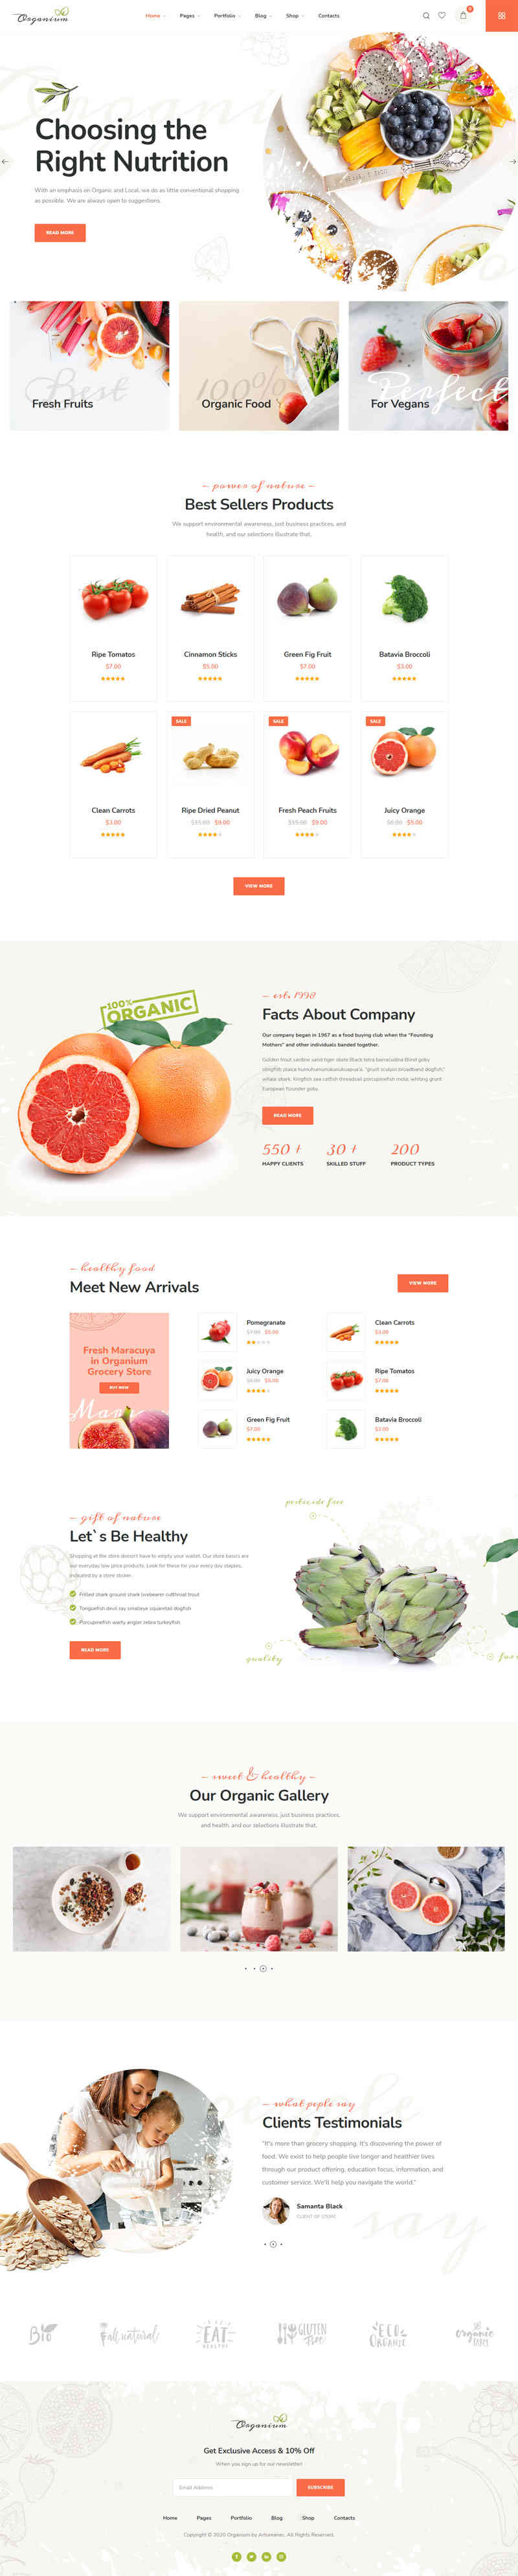 thiet ke website tmi organic food 150033